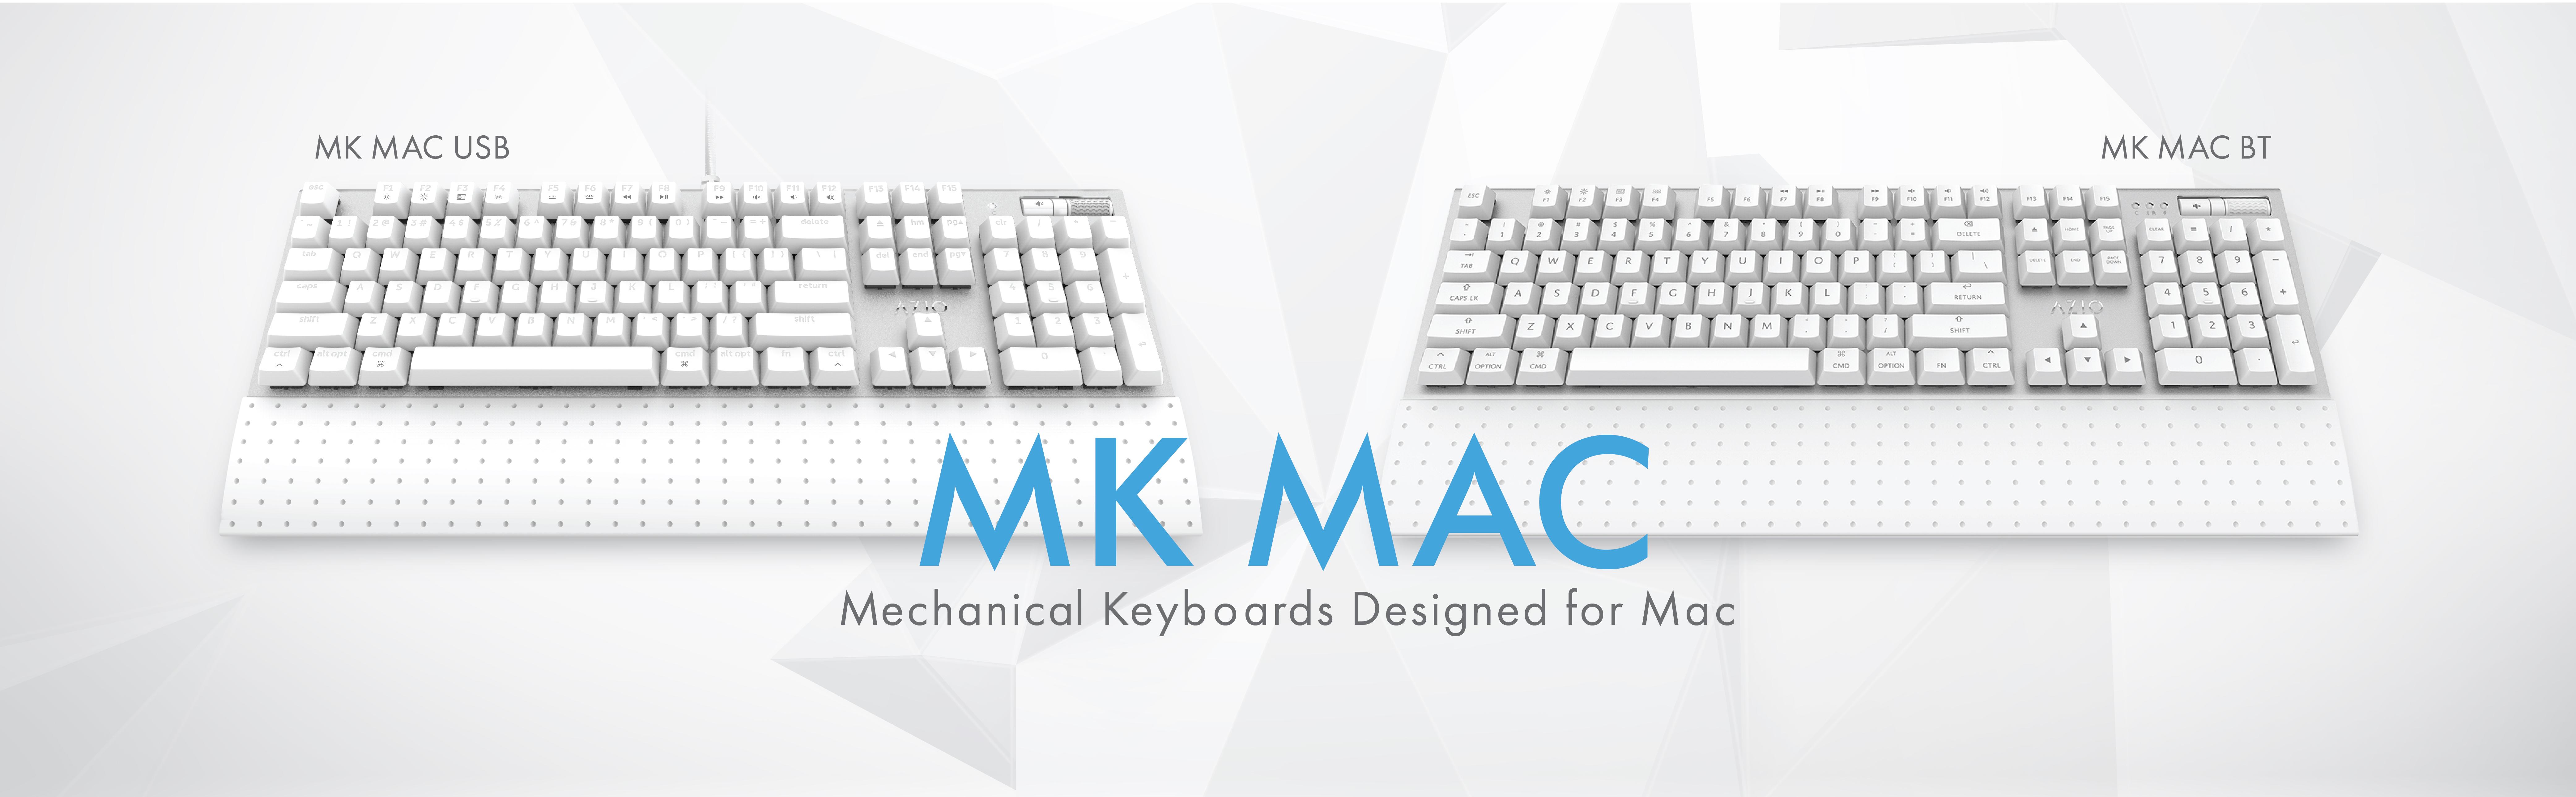 Azio mk mac keyboard